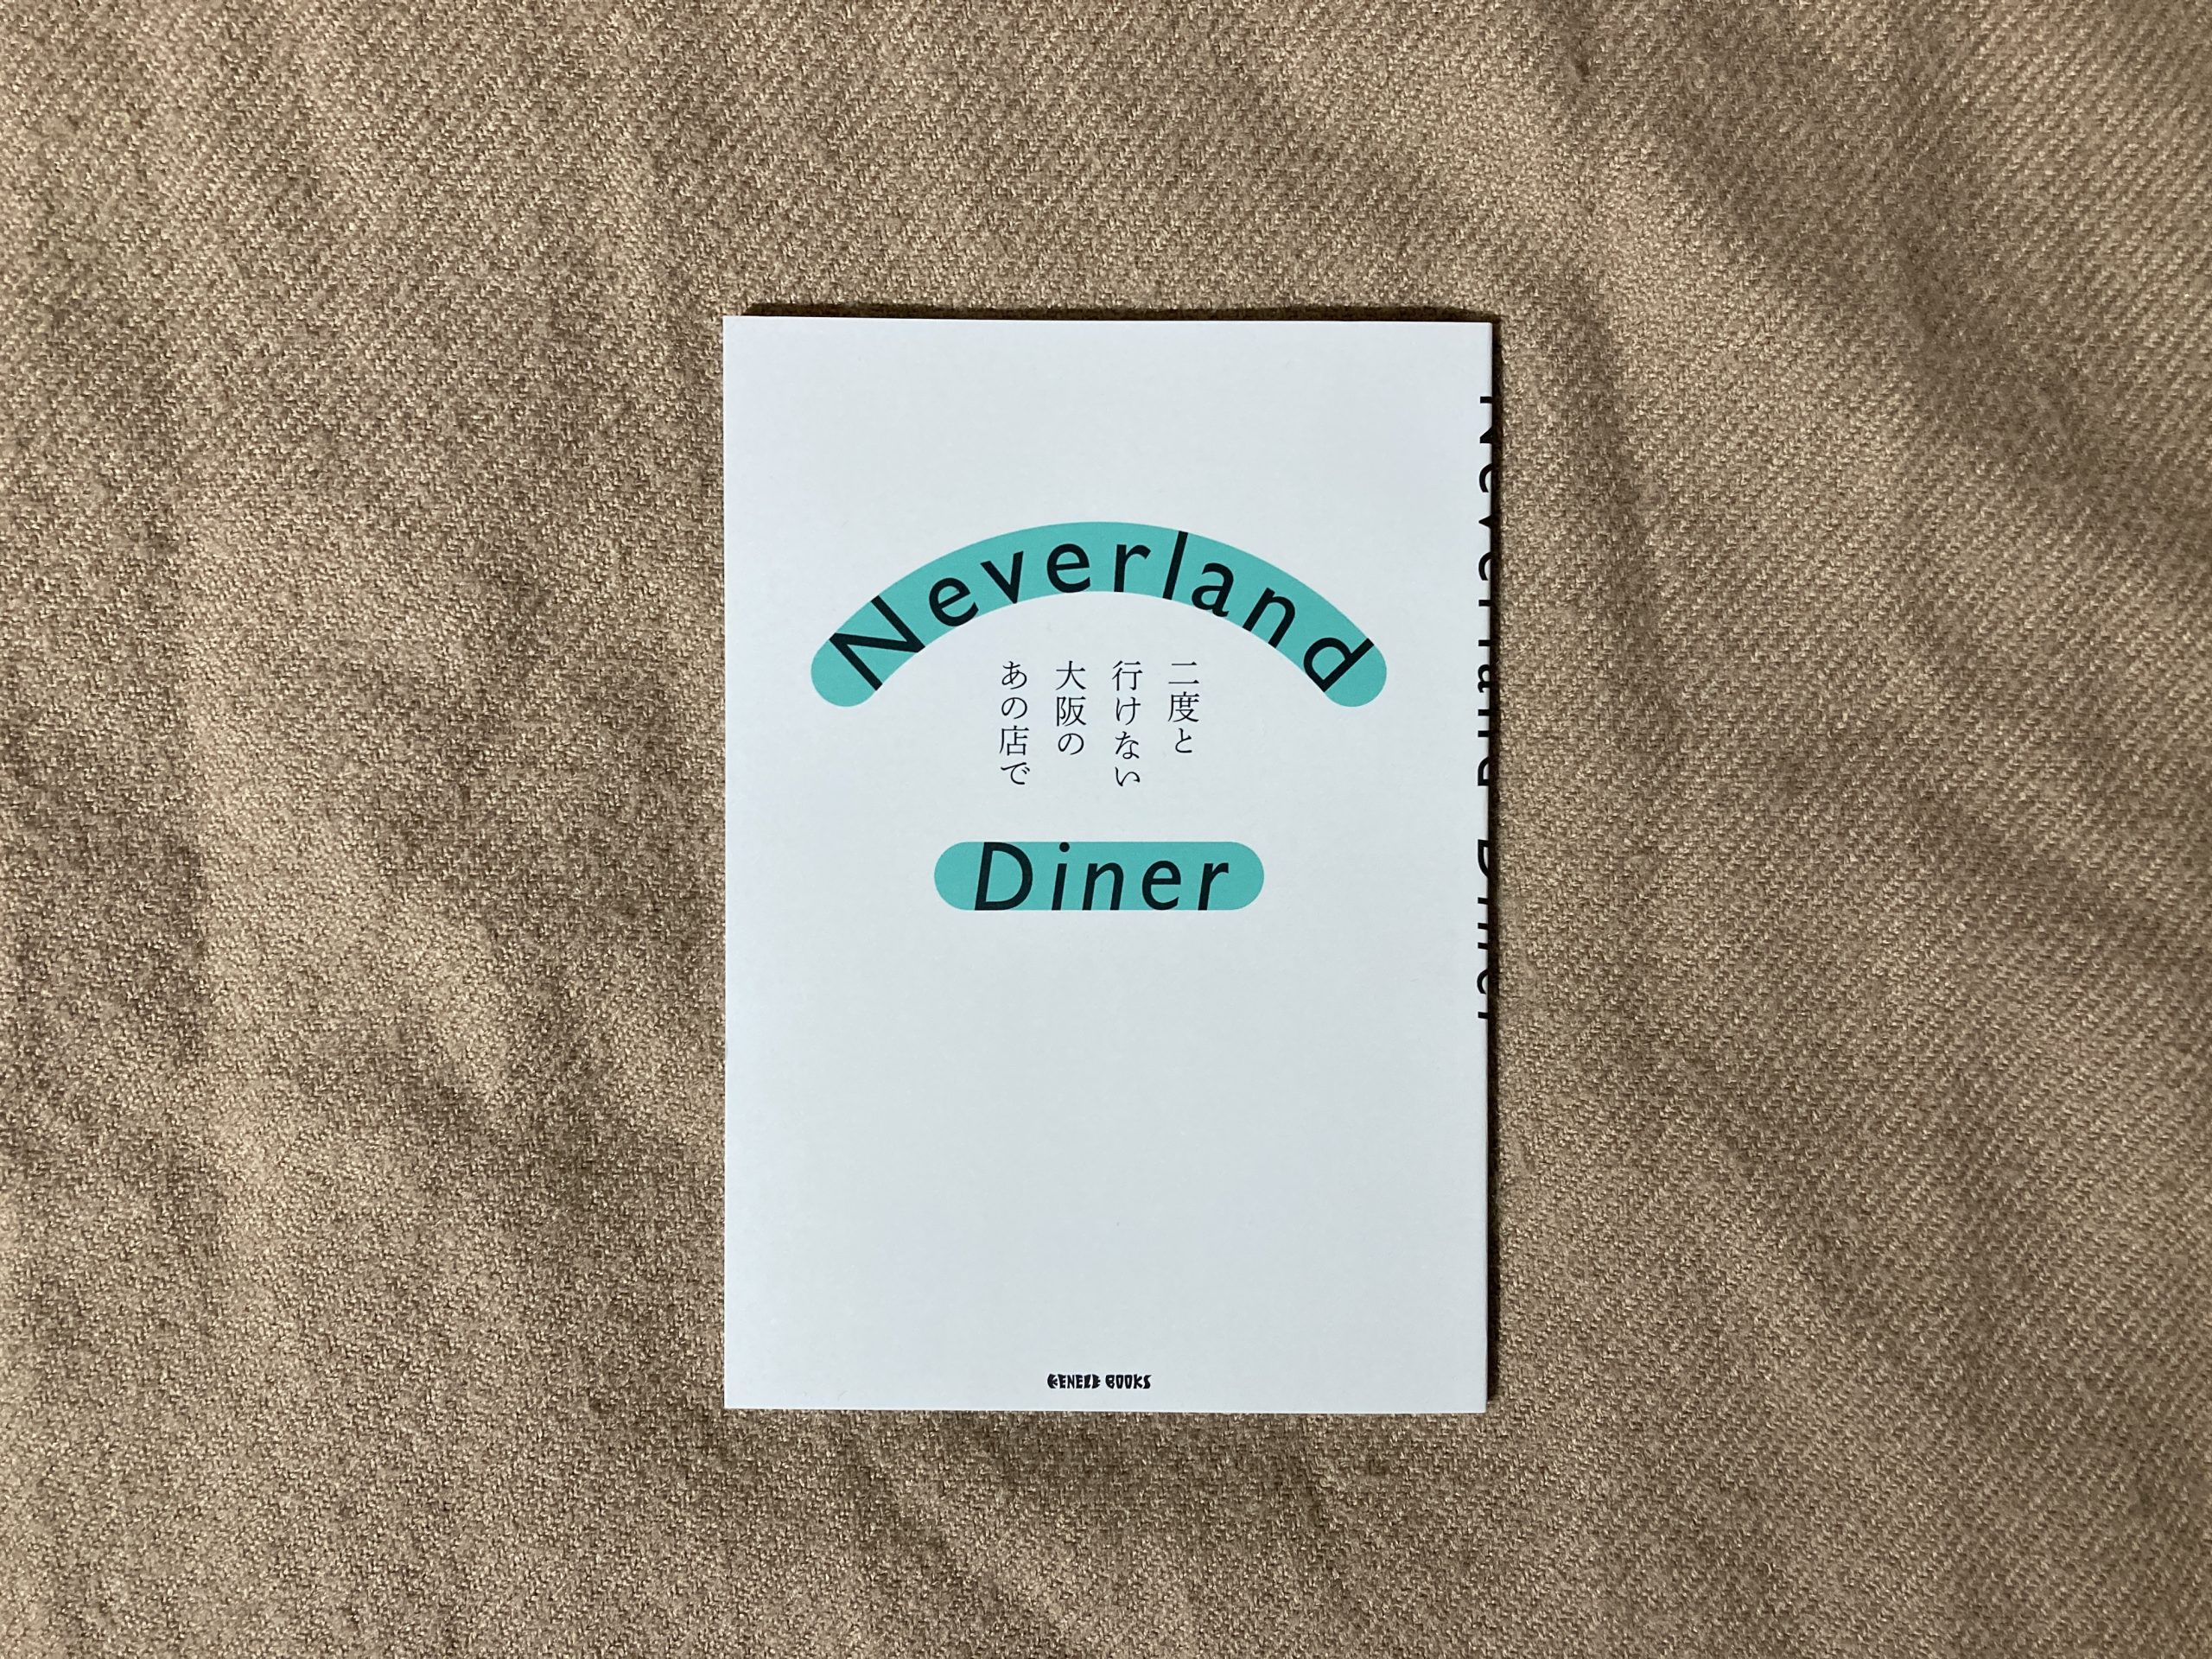 Neverland Diner　二度と行けない大阪のあの店で